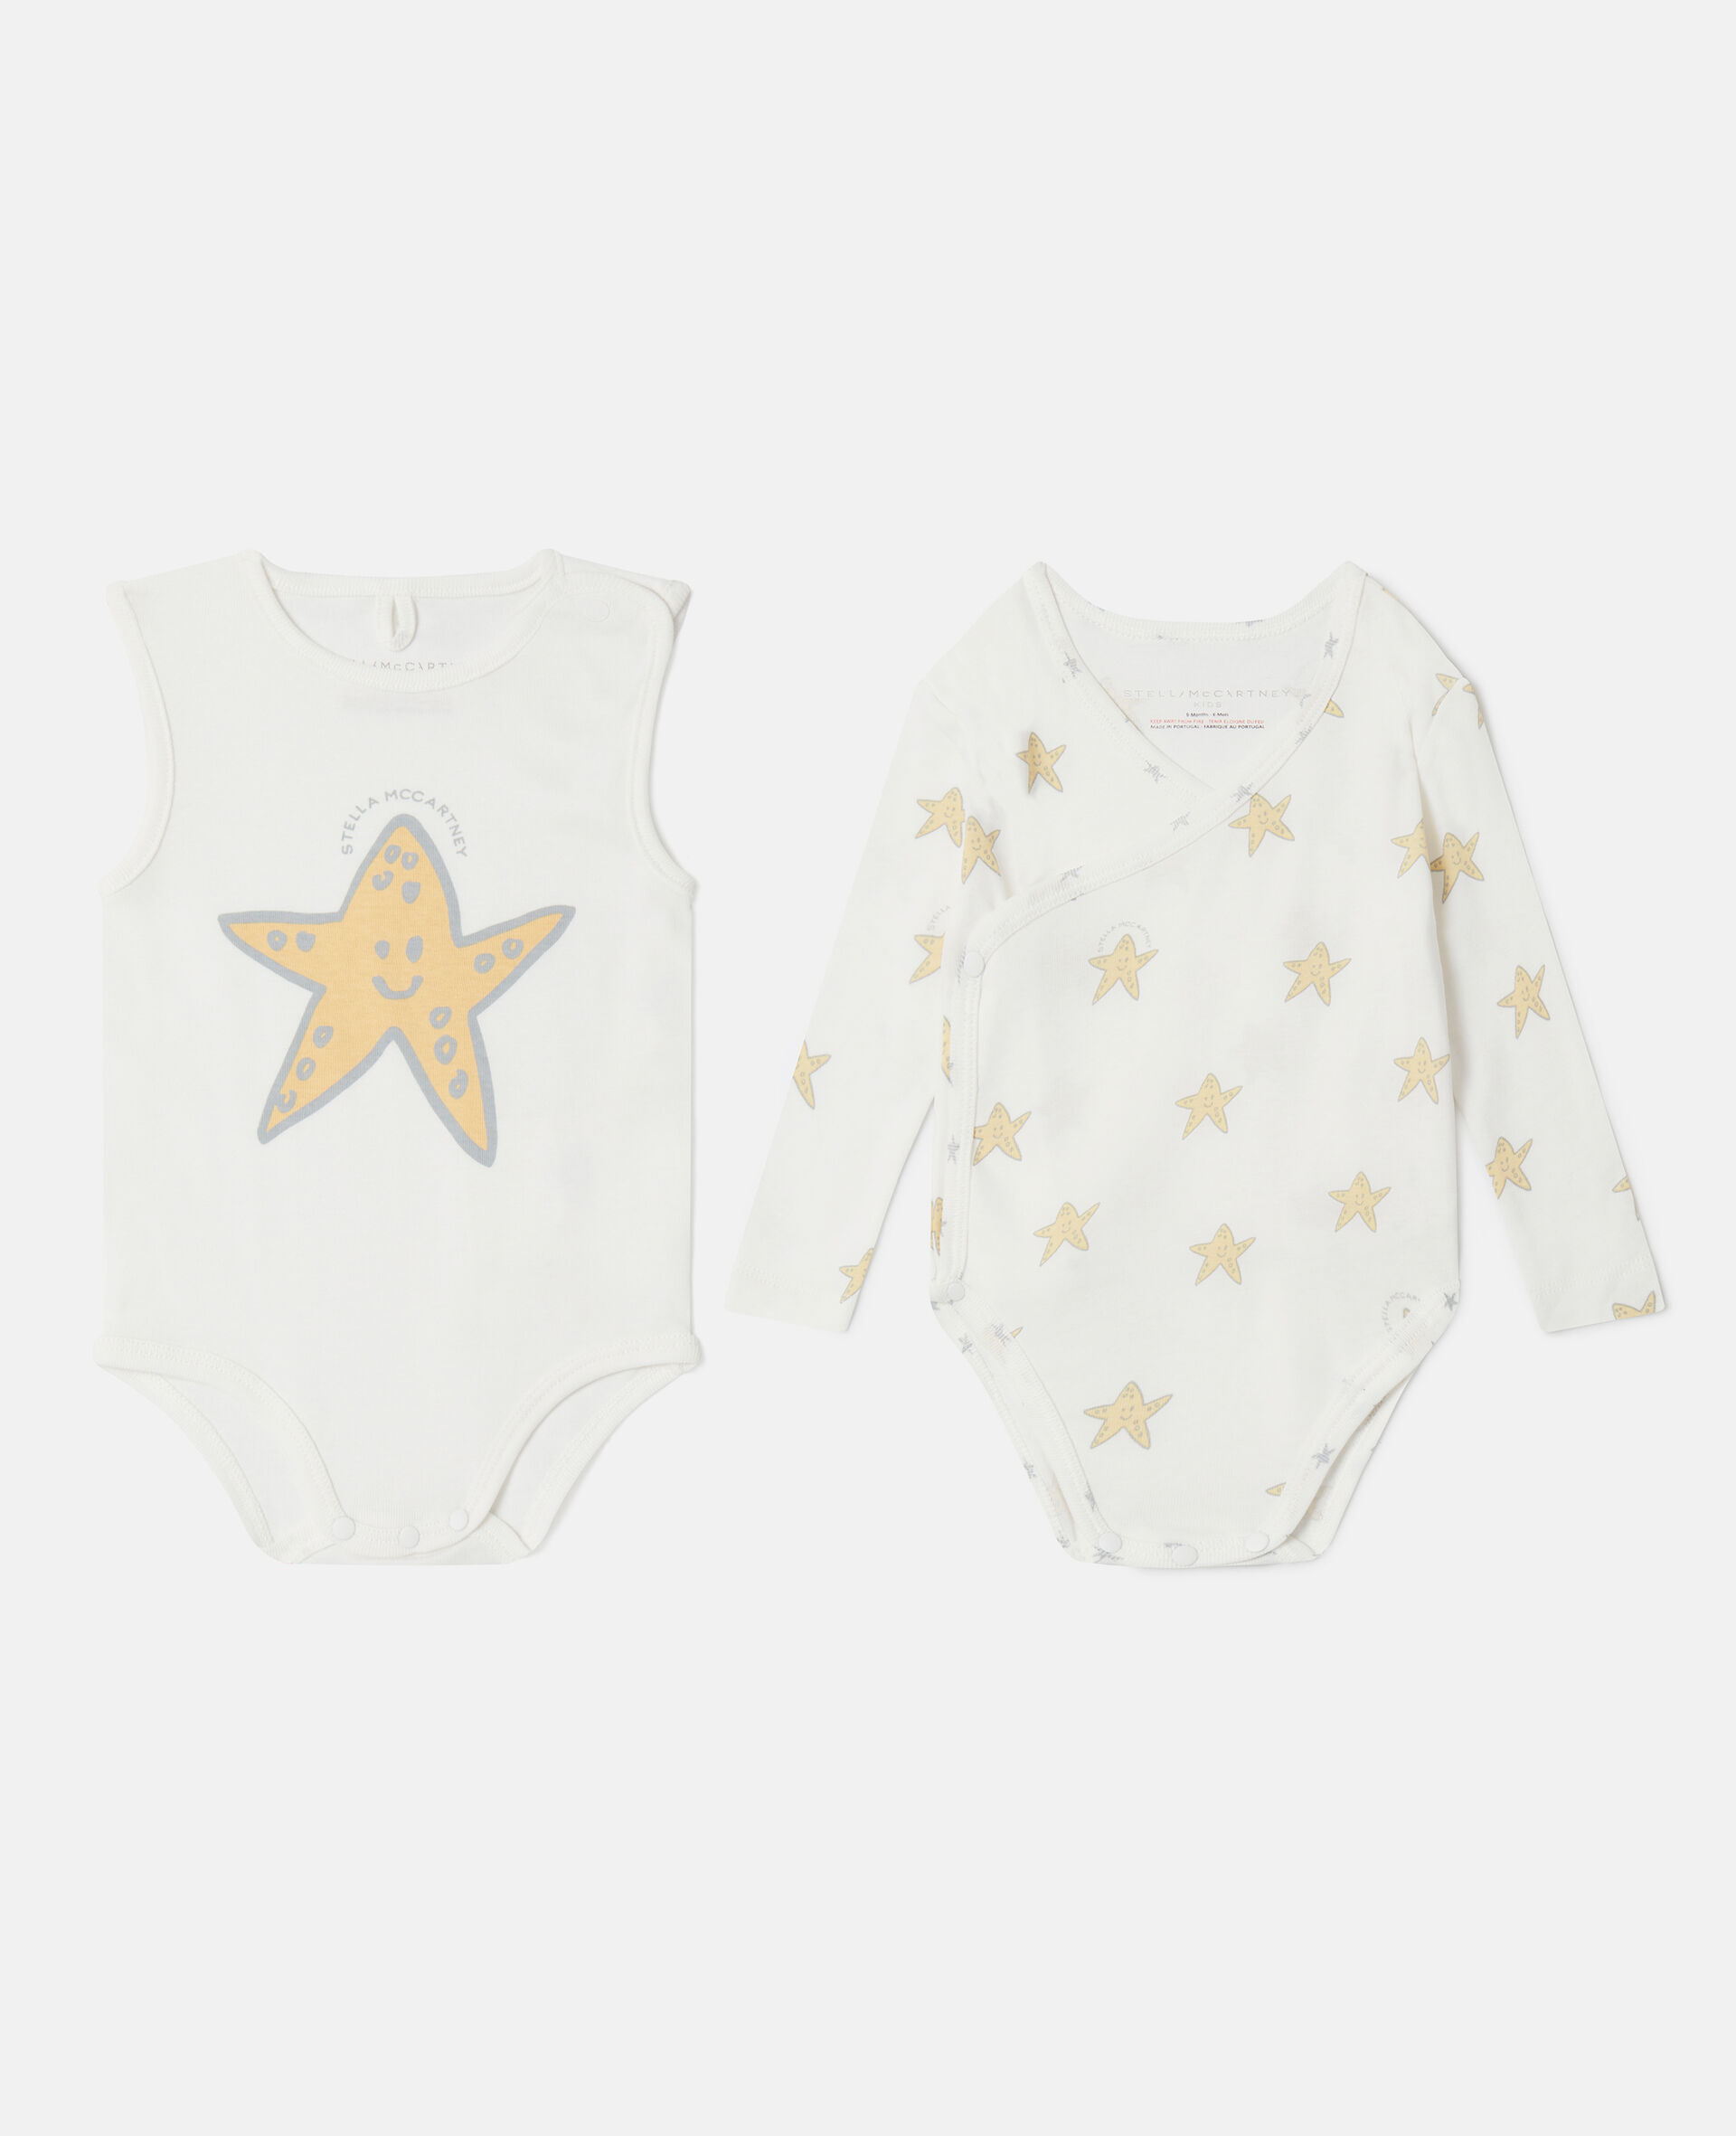 Smiling Stella Star Print Bodysuit and Sleepsuit Set-Multicolored-medium